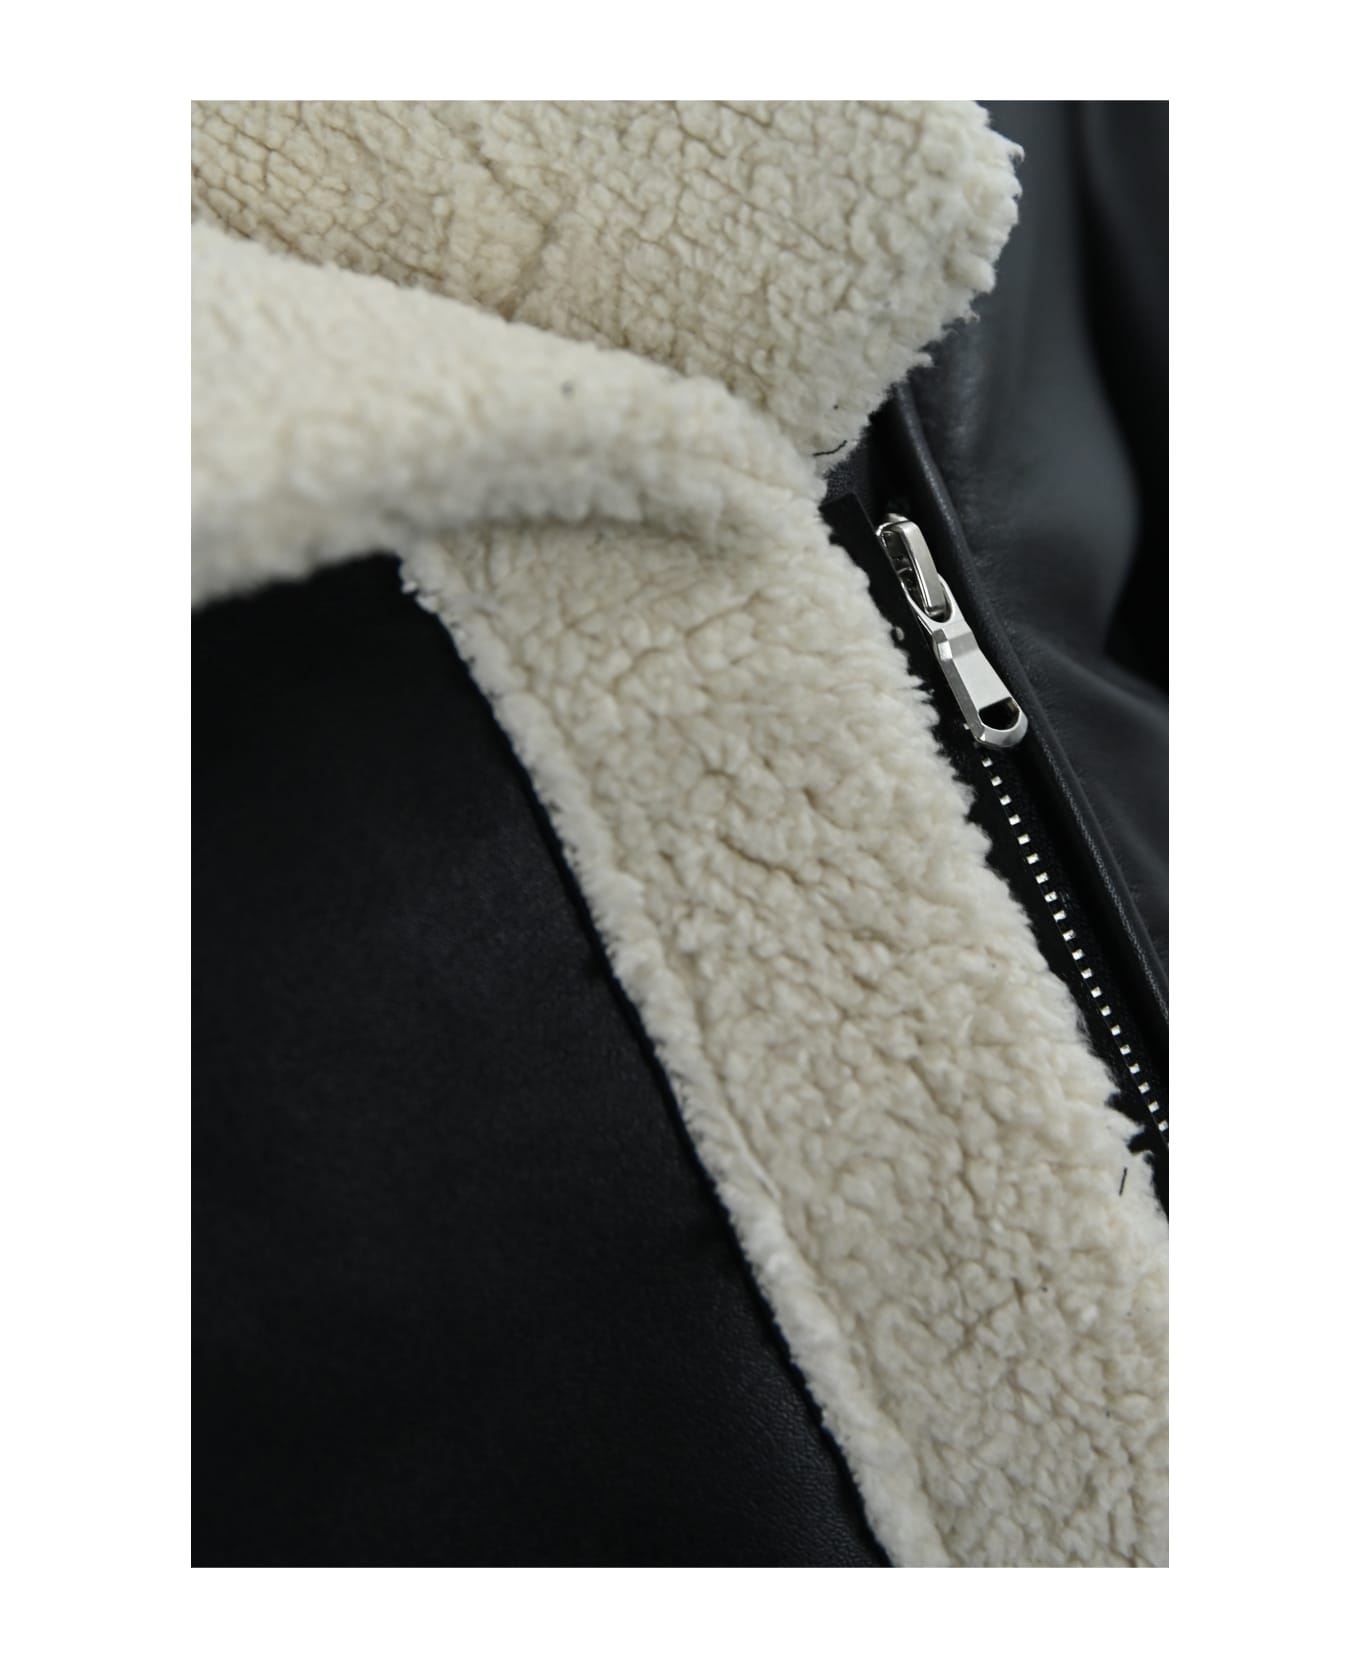 D'Amico Megan Leather Jacket - Nero/bianco